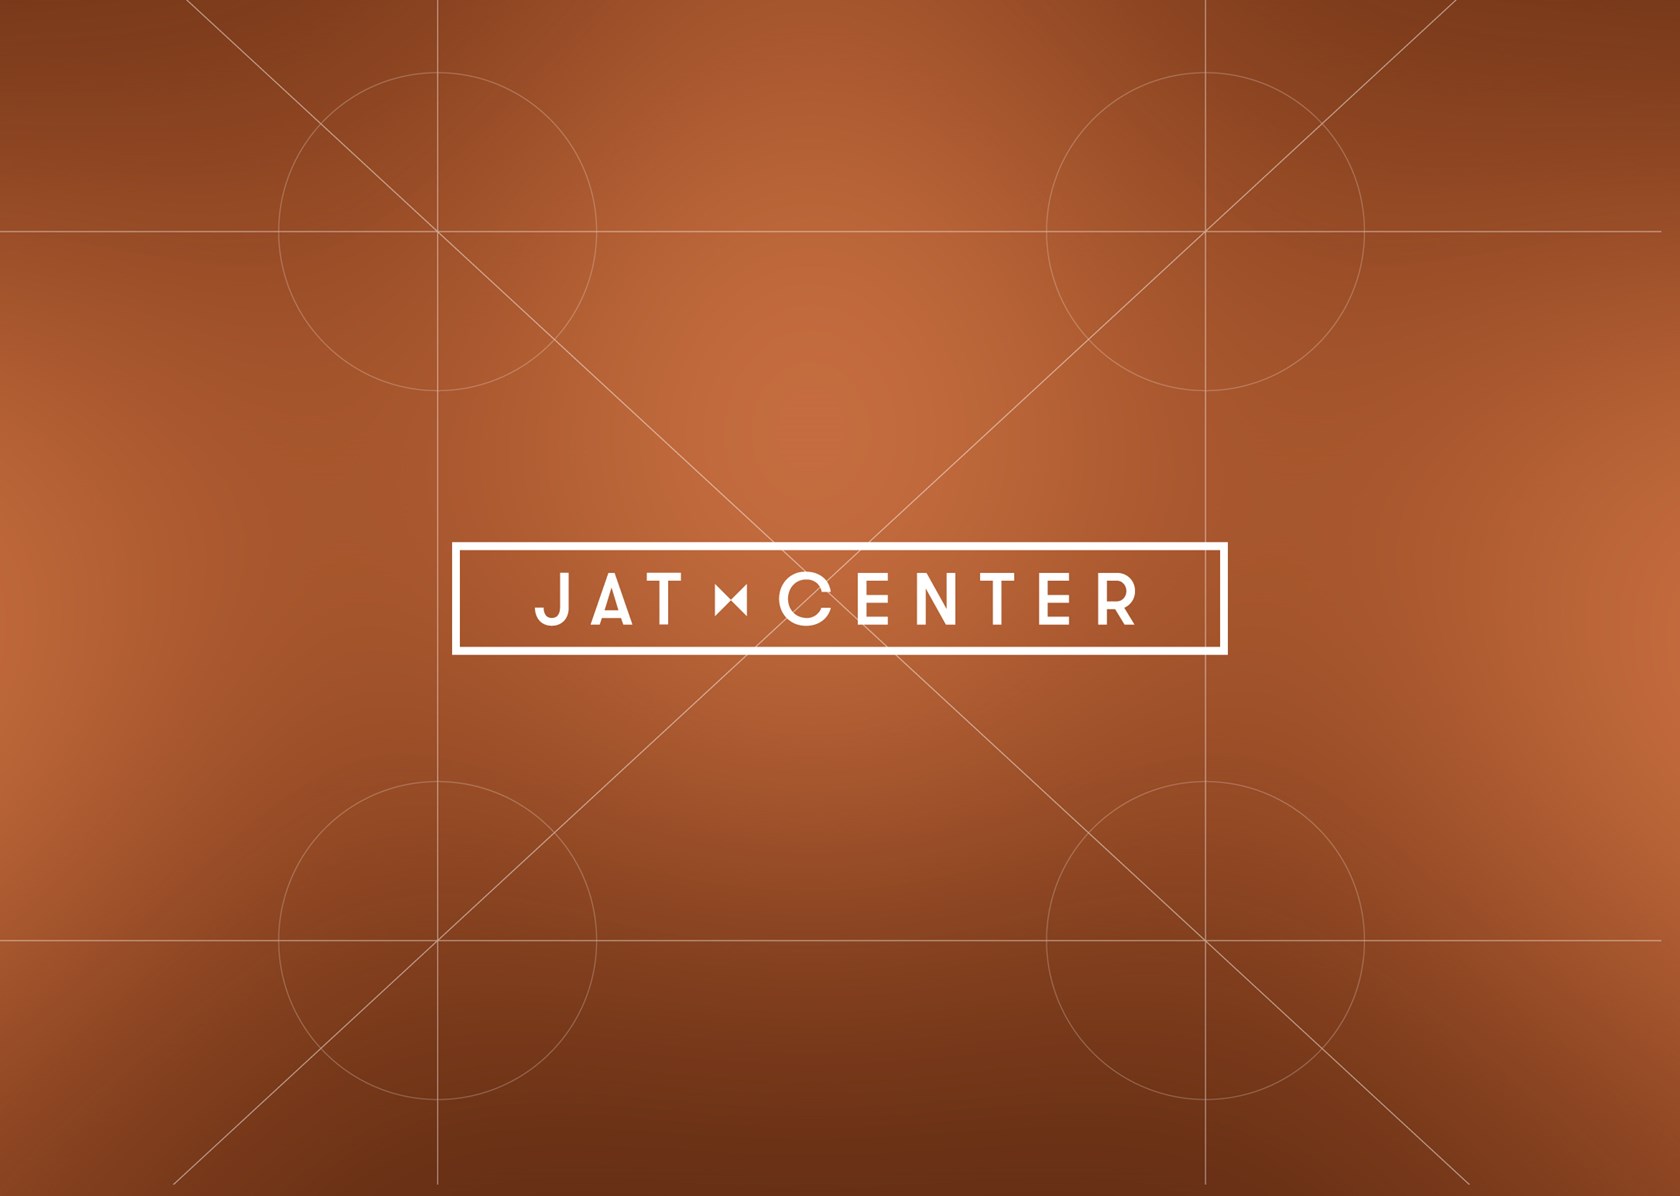 Case Jat Center Unlock Site 02